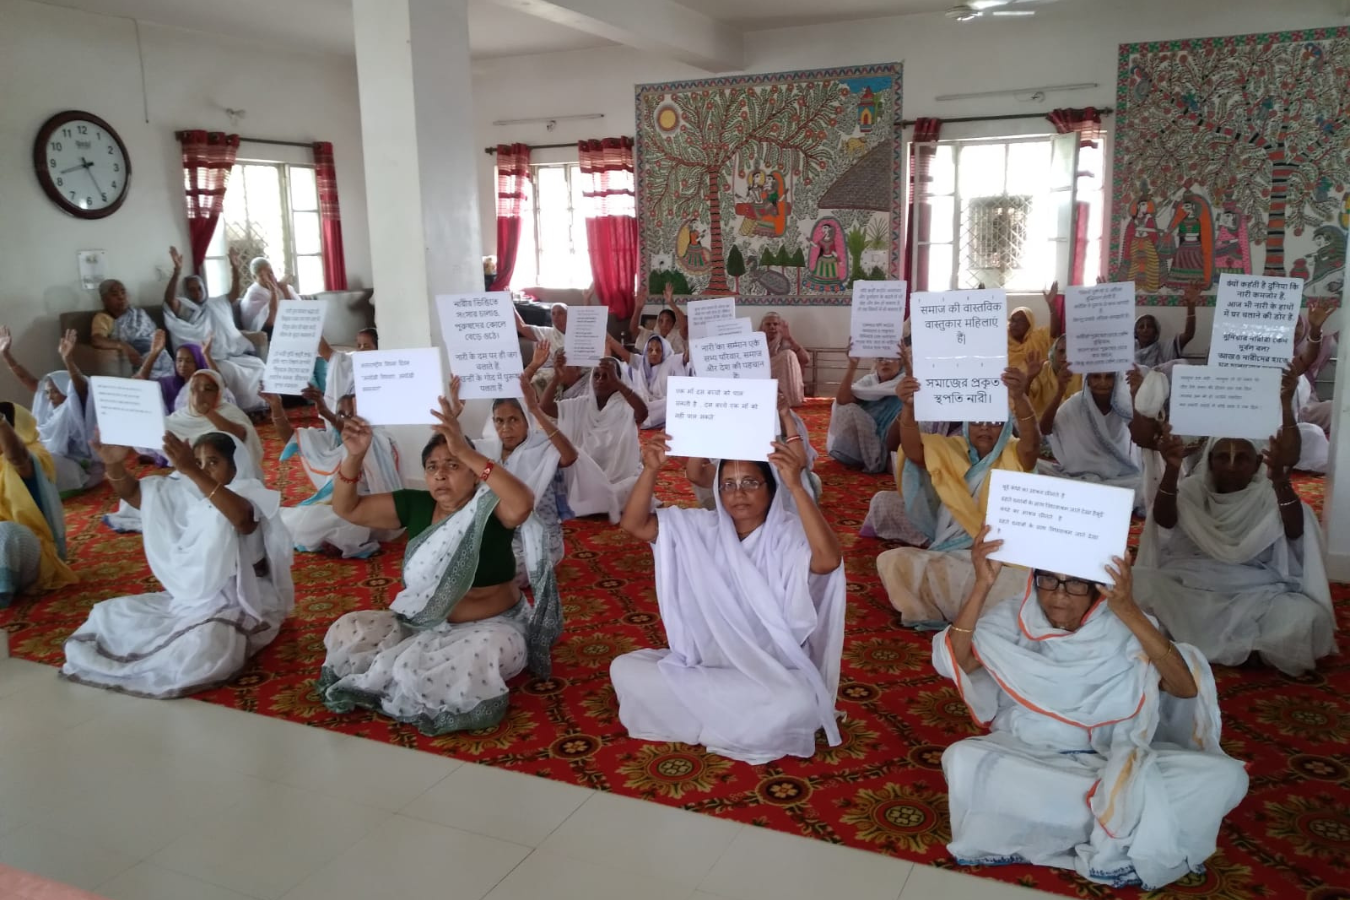 International Widows Day: No redemption for widows in India